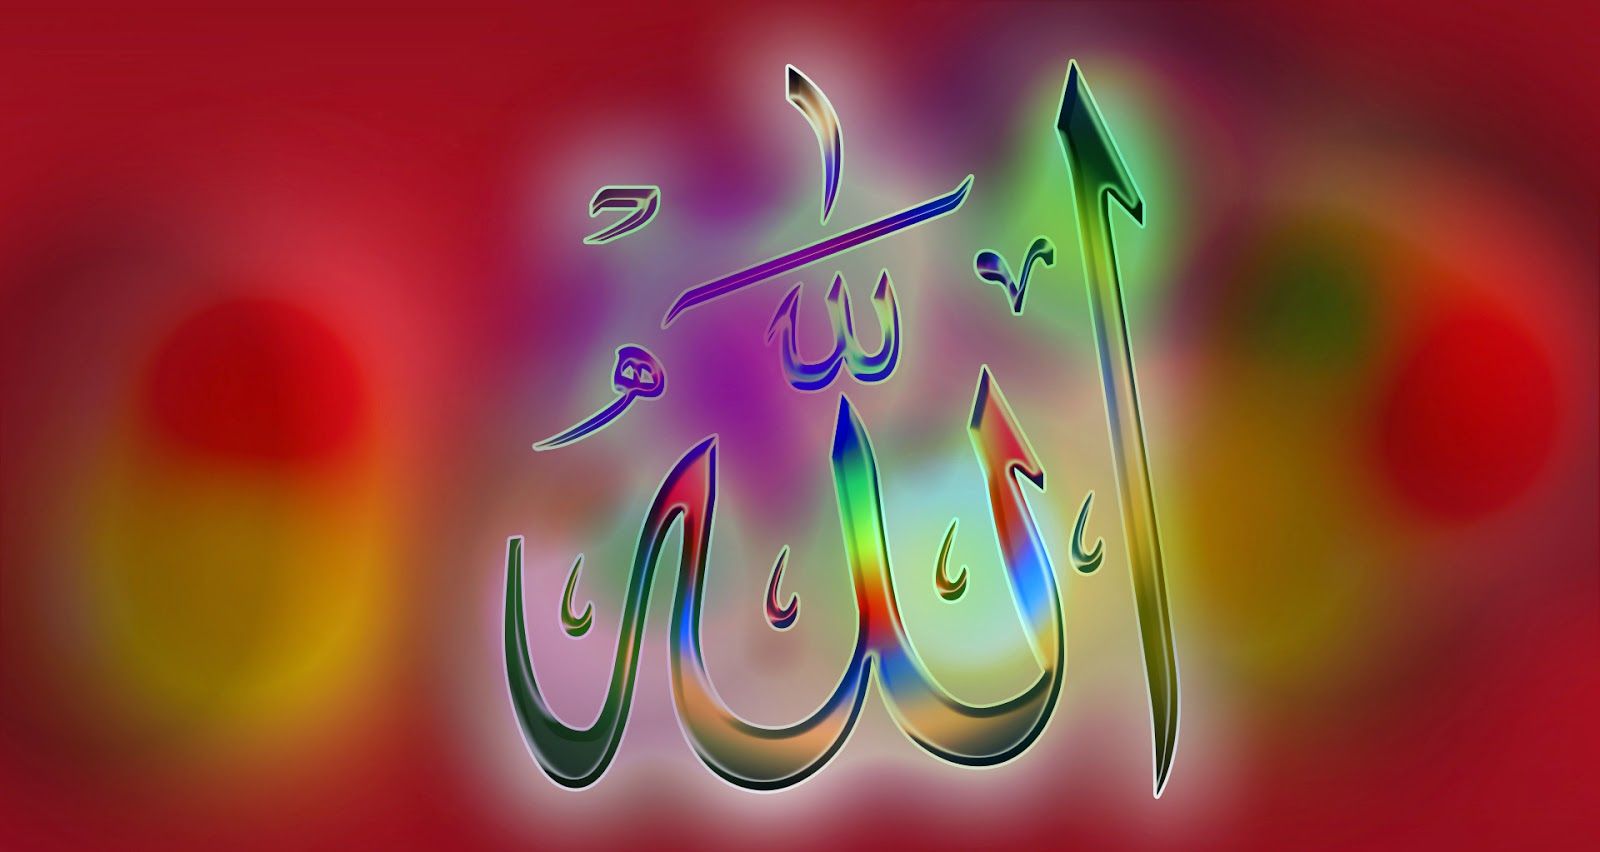 Allah Name Pic Hd - HD Wallpaper 